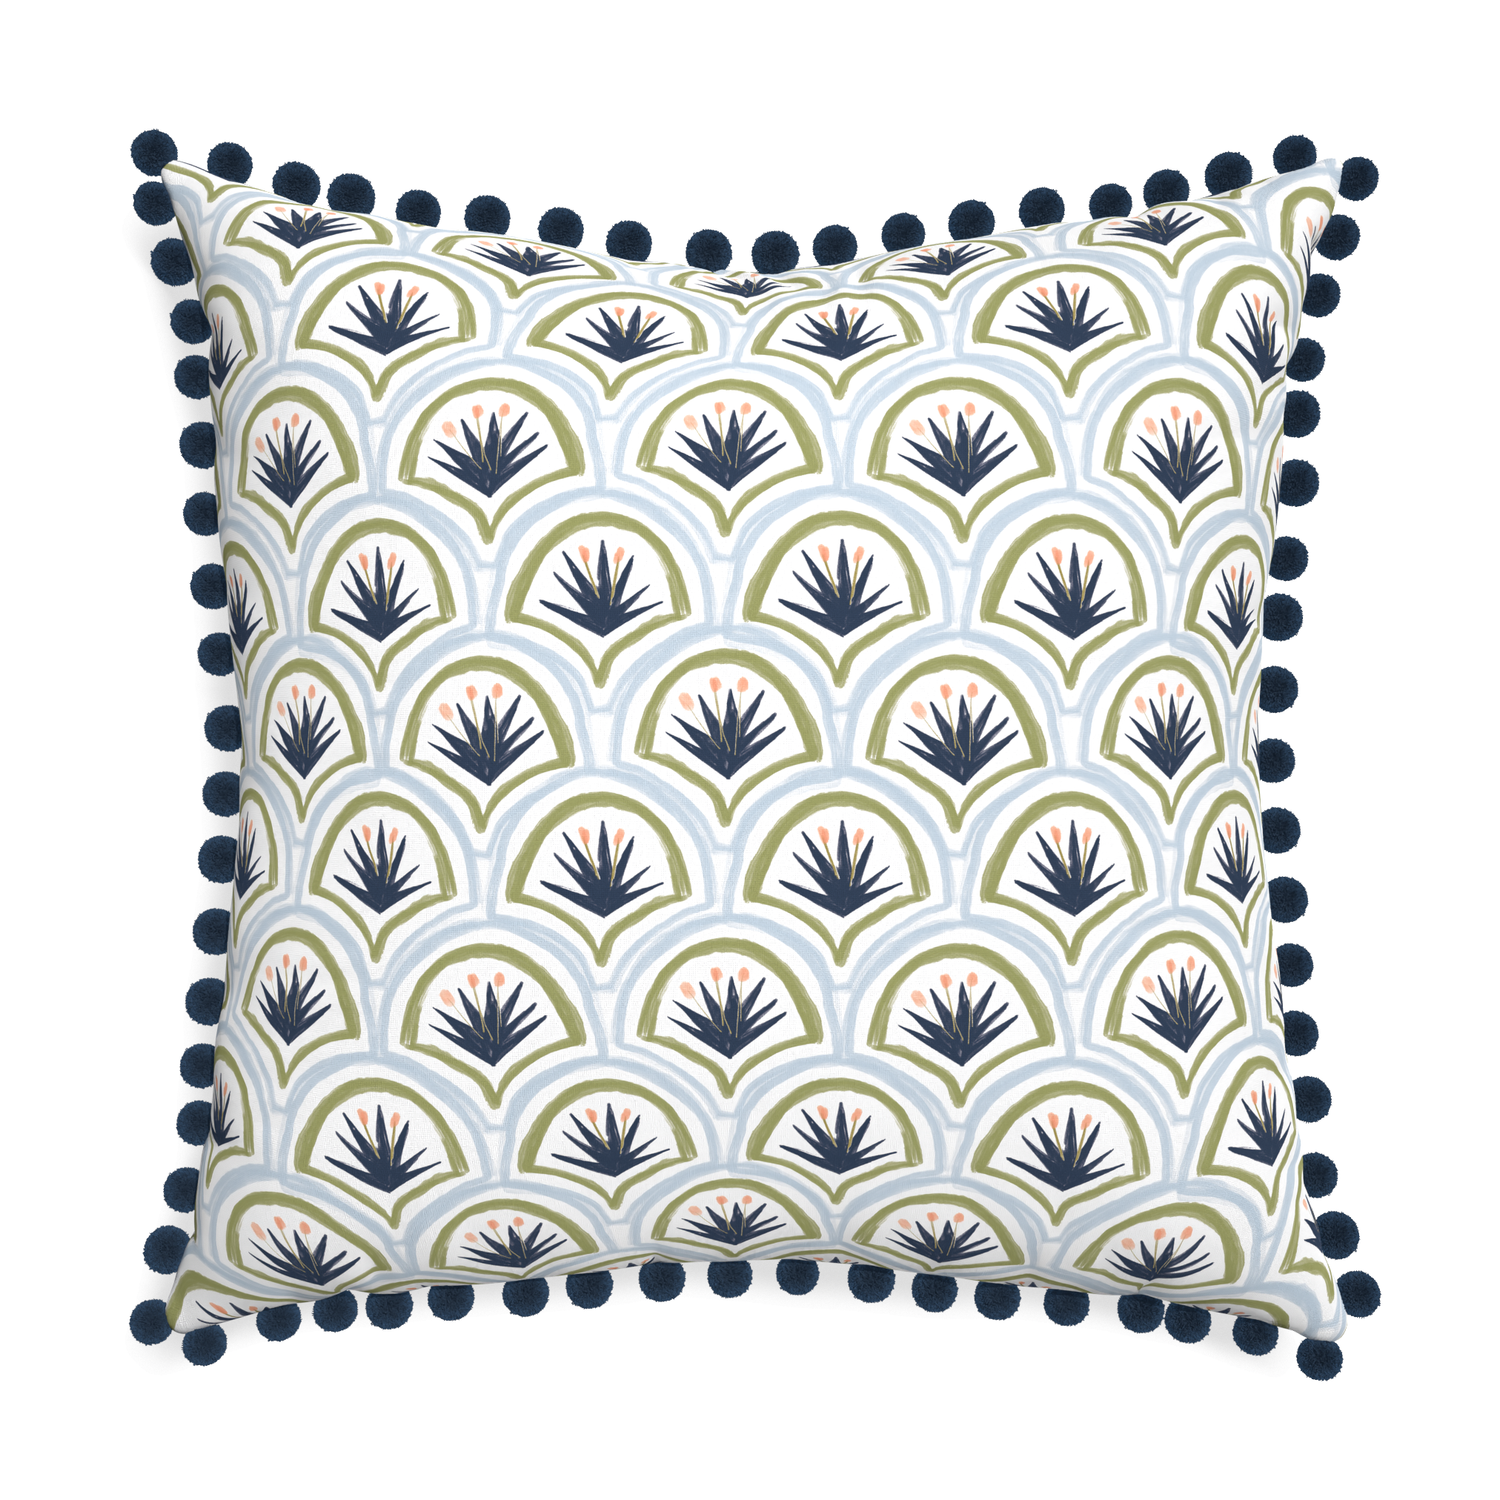 Euro-sham thatcher midnight custom art deco palm patternpillow with c on white background